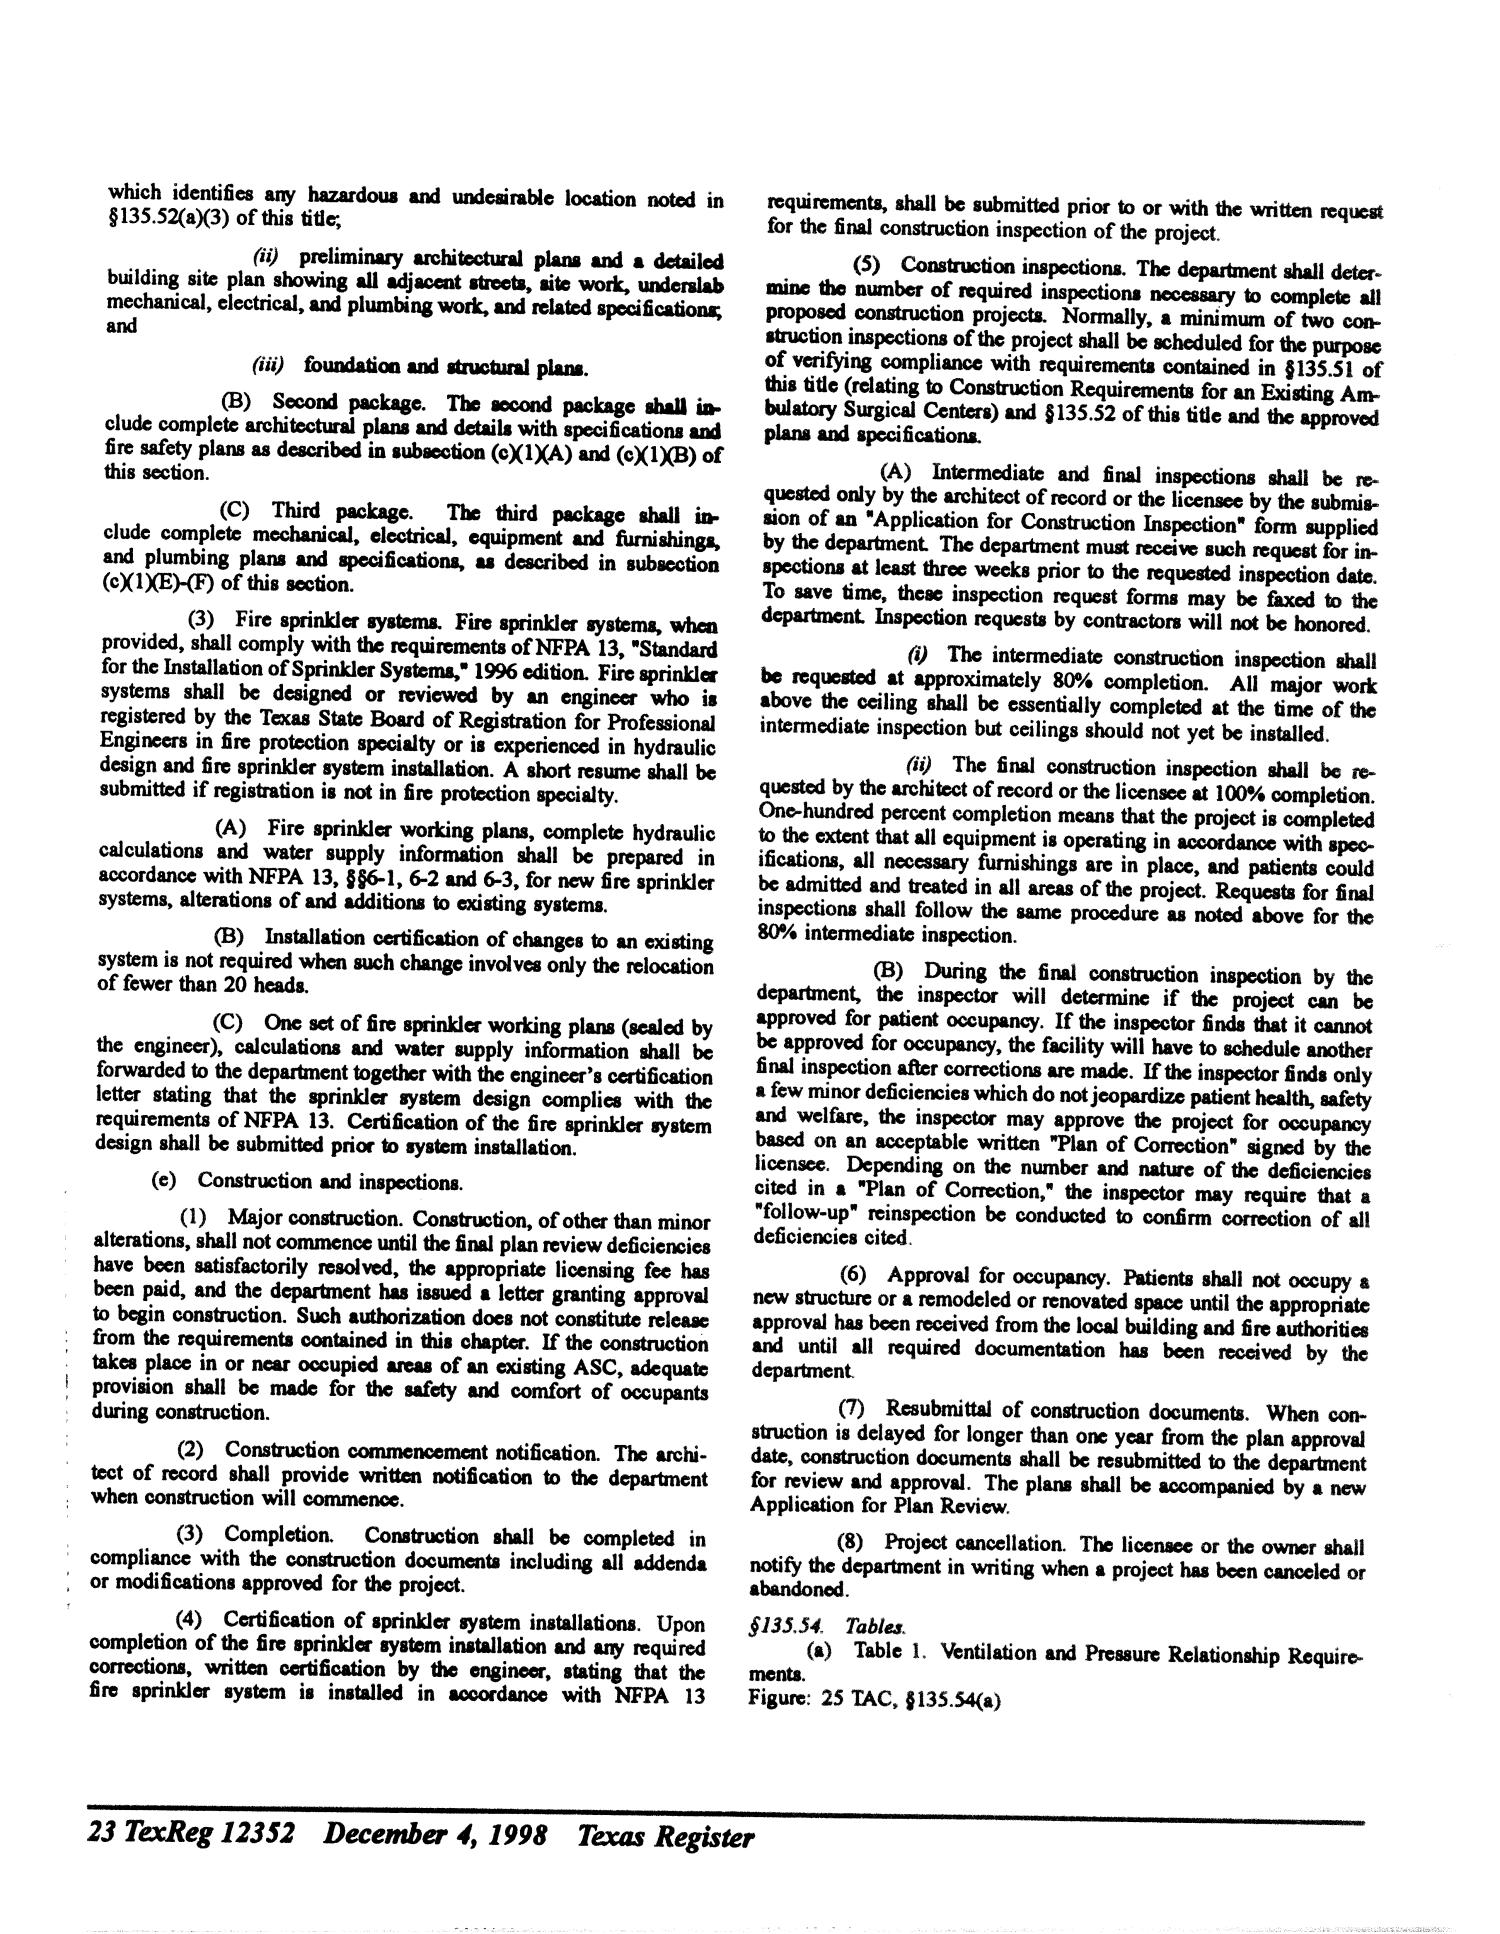 Texas Register, Volume 23, Number 49, Part III, Pages 12311-12450, December 4, 1998
                                                
                                                    12352
                                                